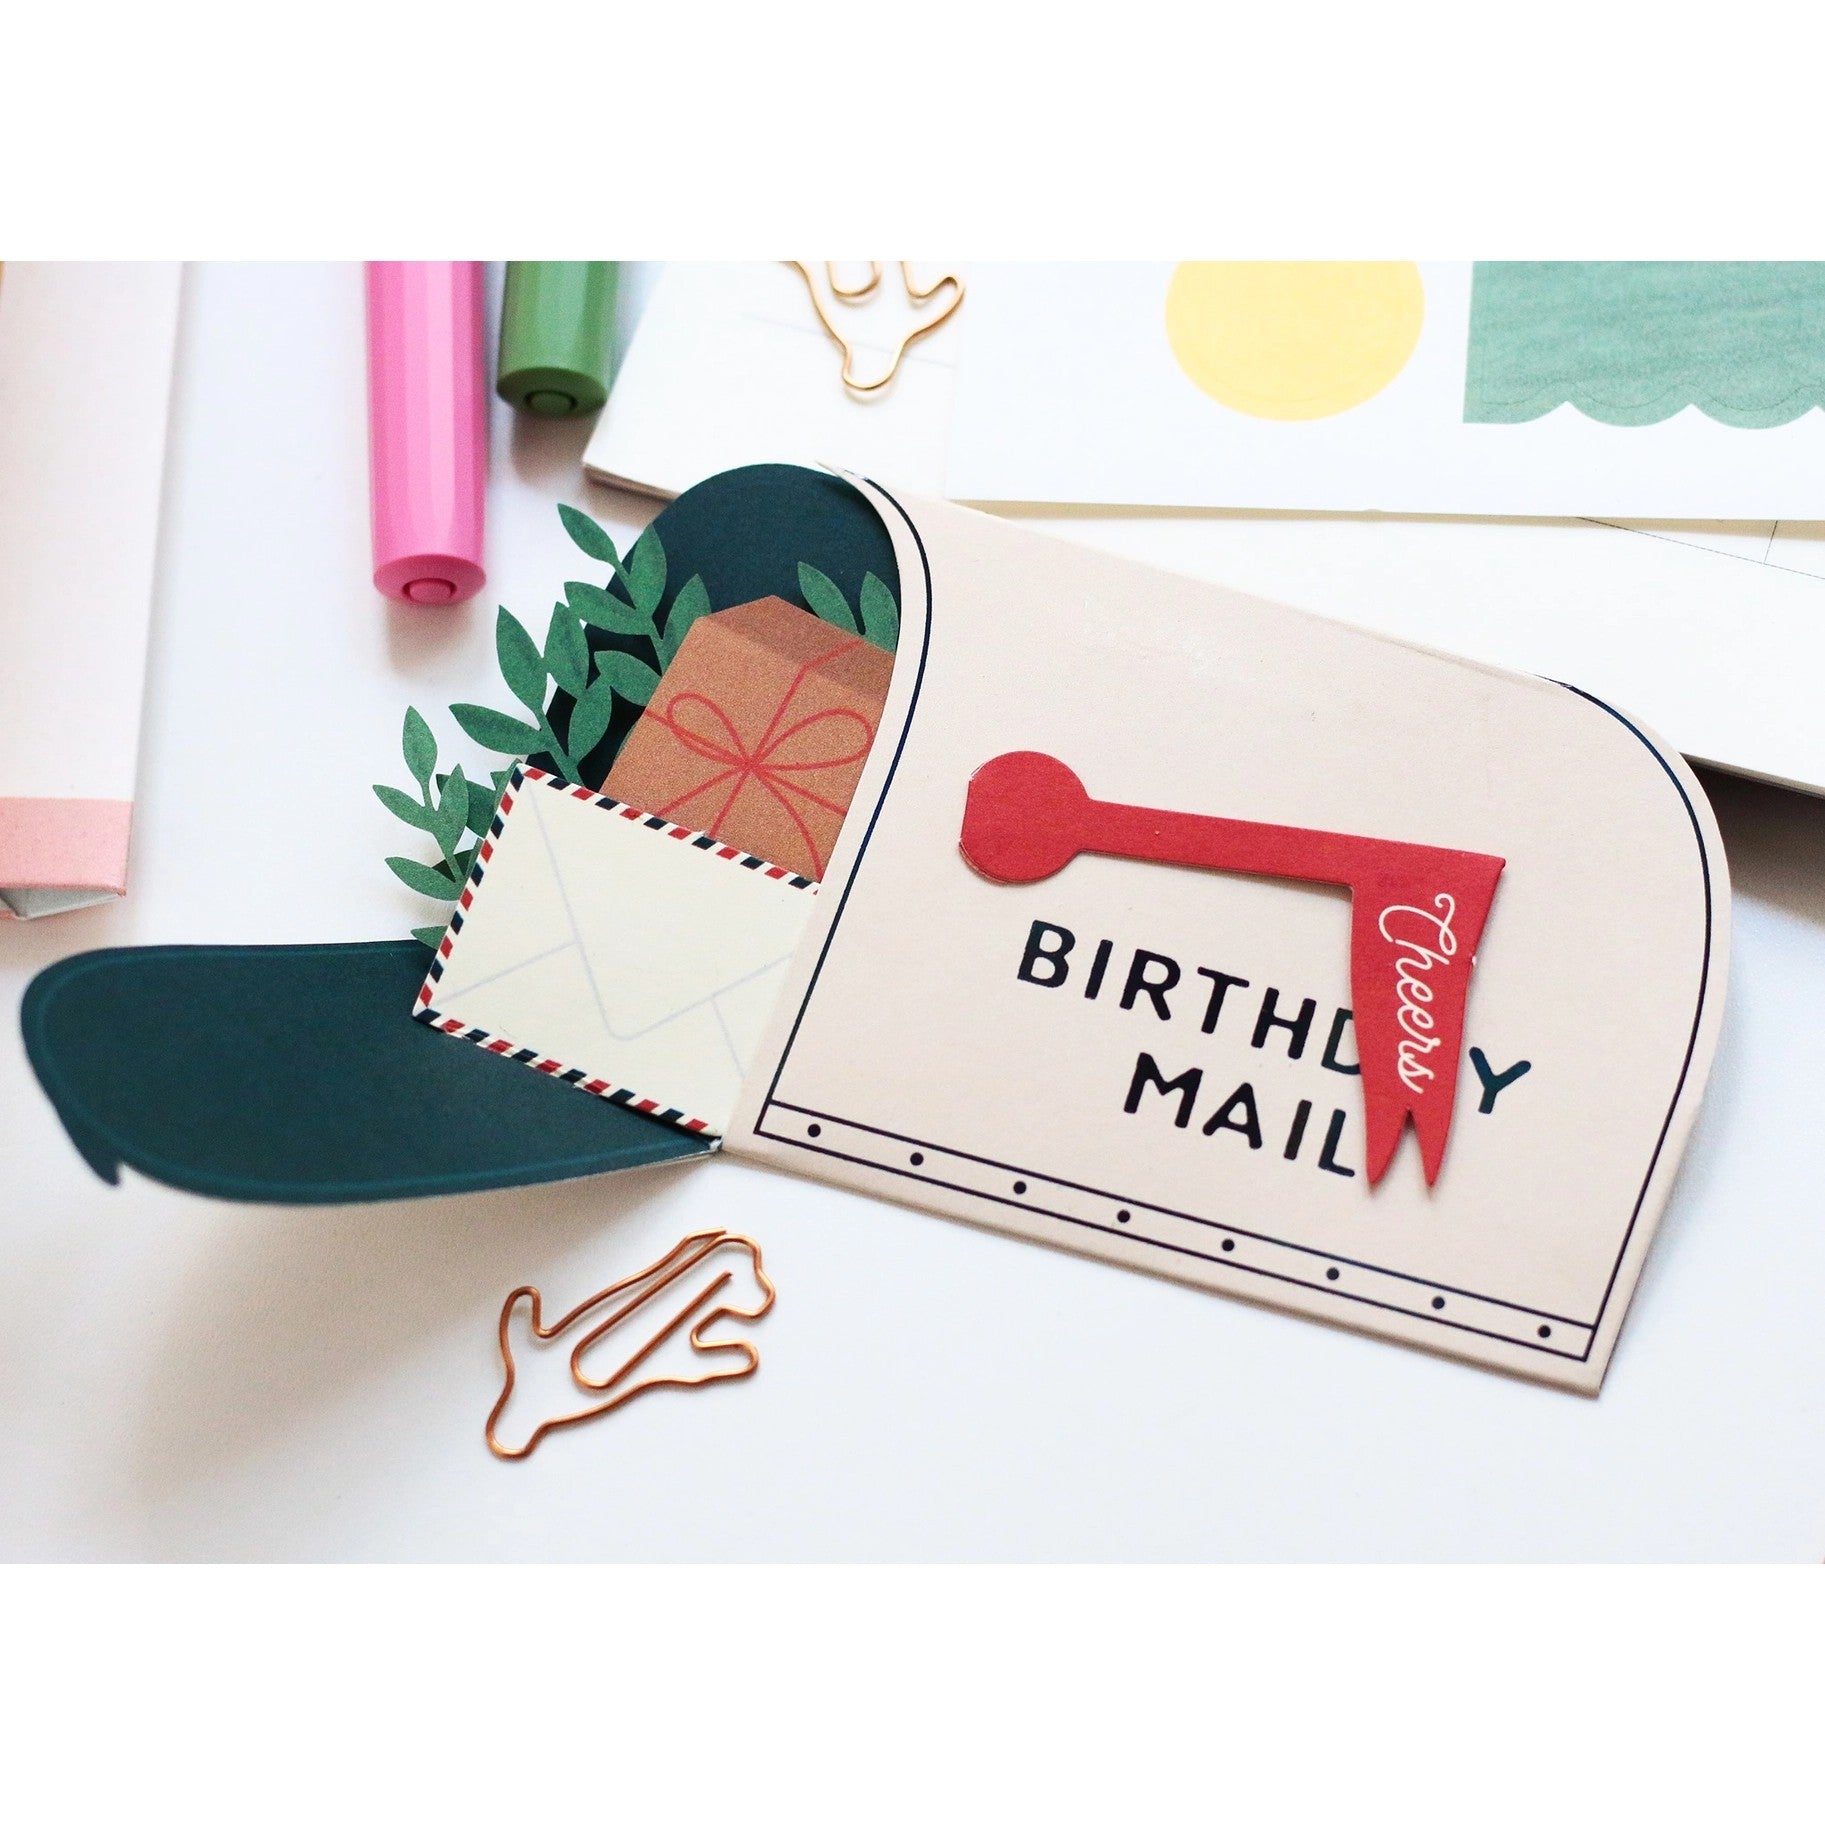 Birthday Mailbox Interactive Card